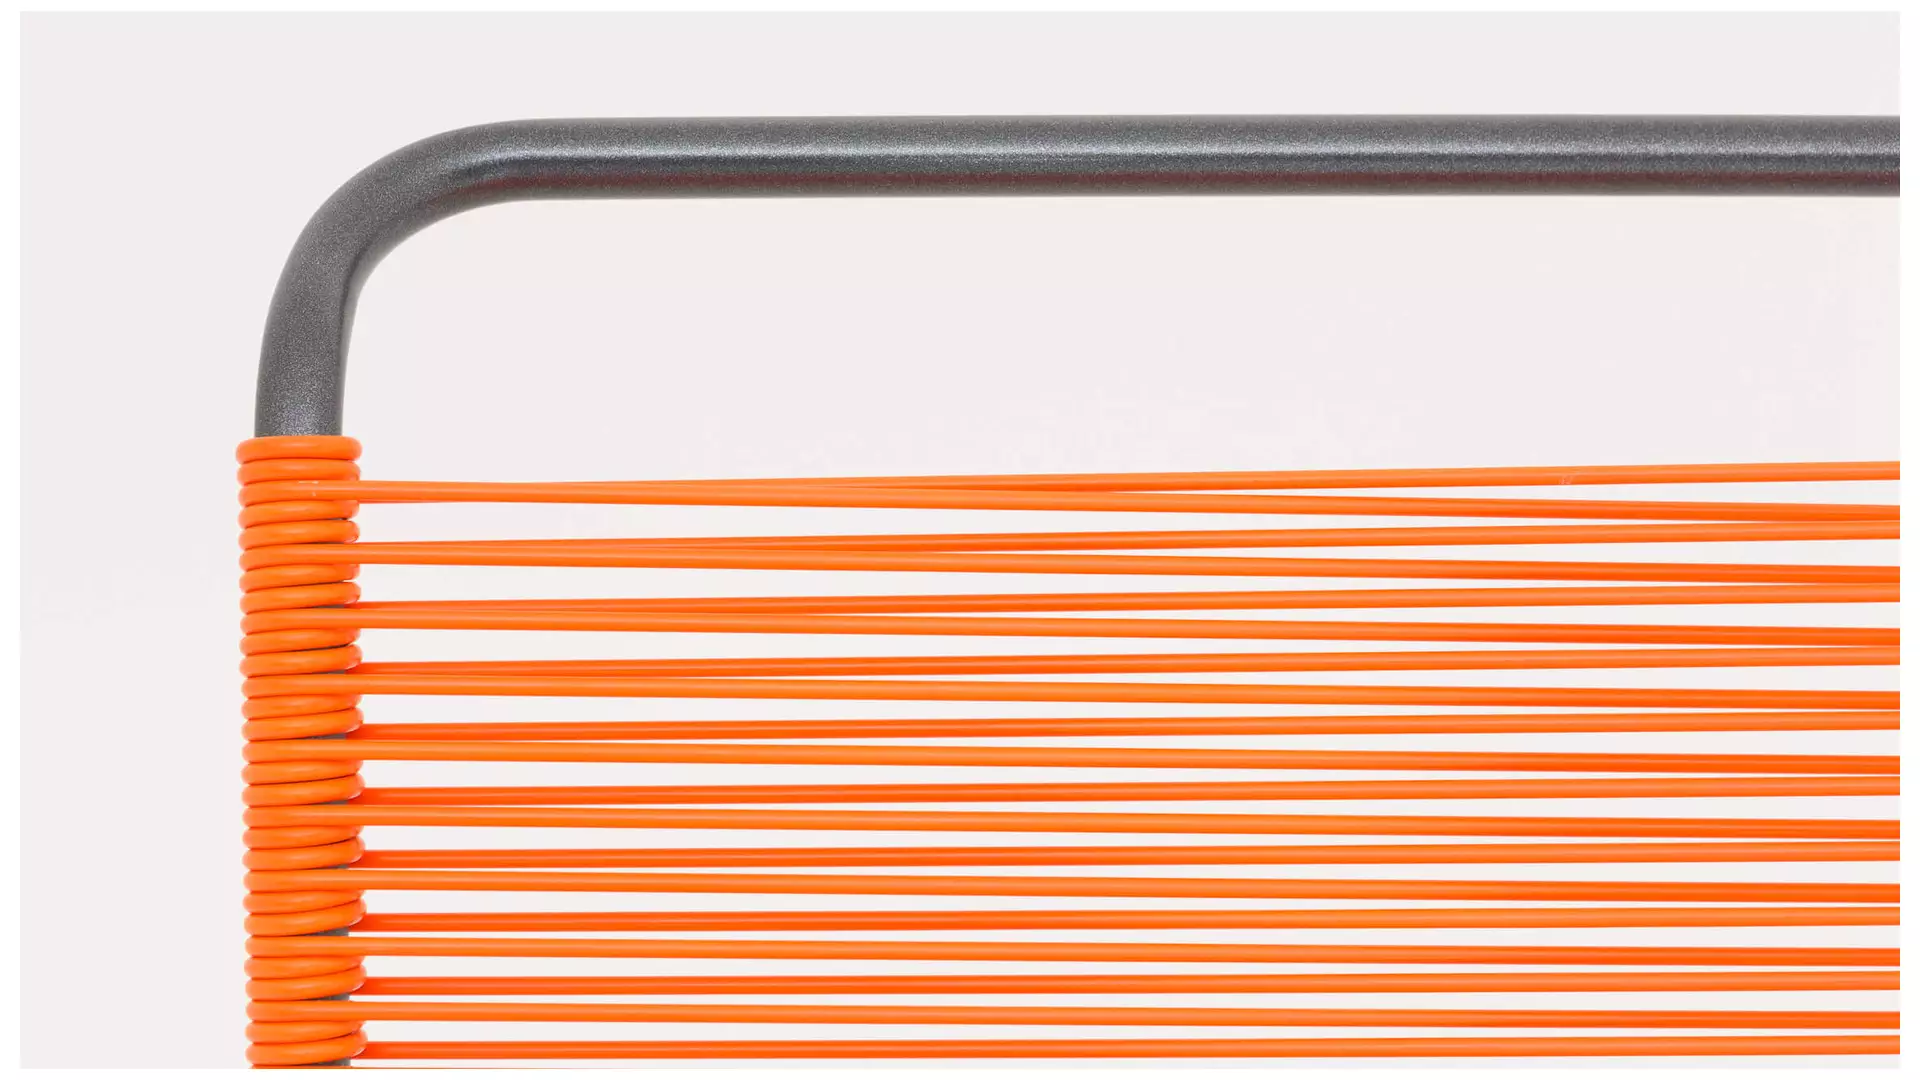 Spaghetti-Stuhl Säntis Schaffner / Farbe: Orange / Material: